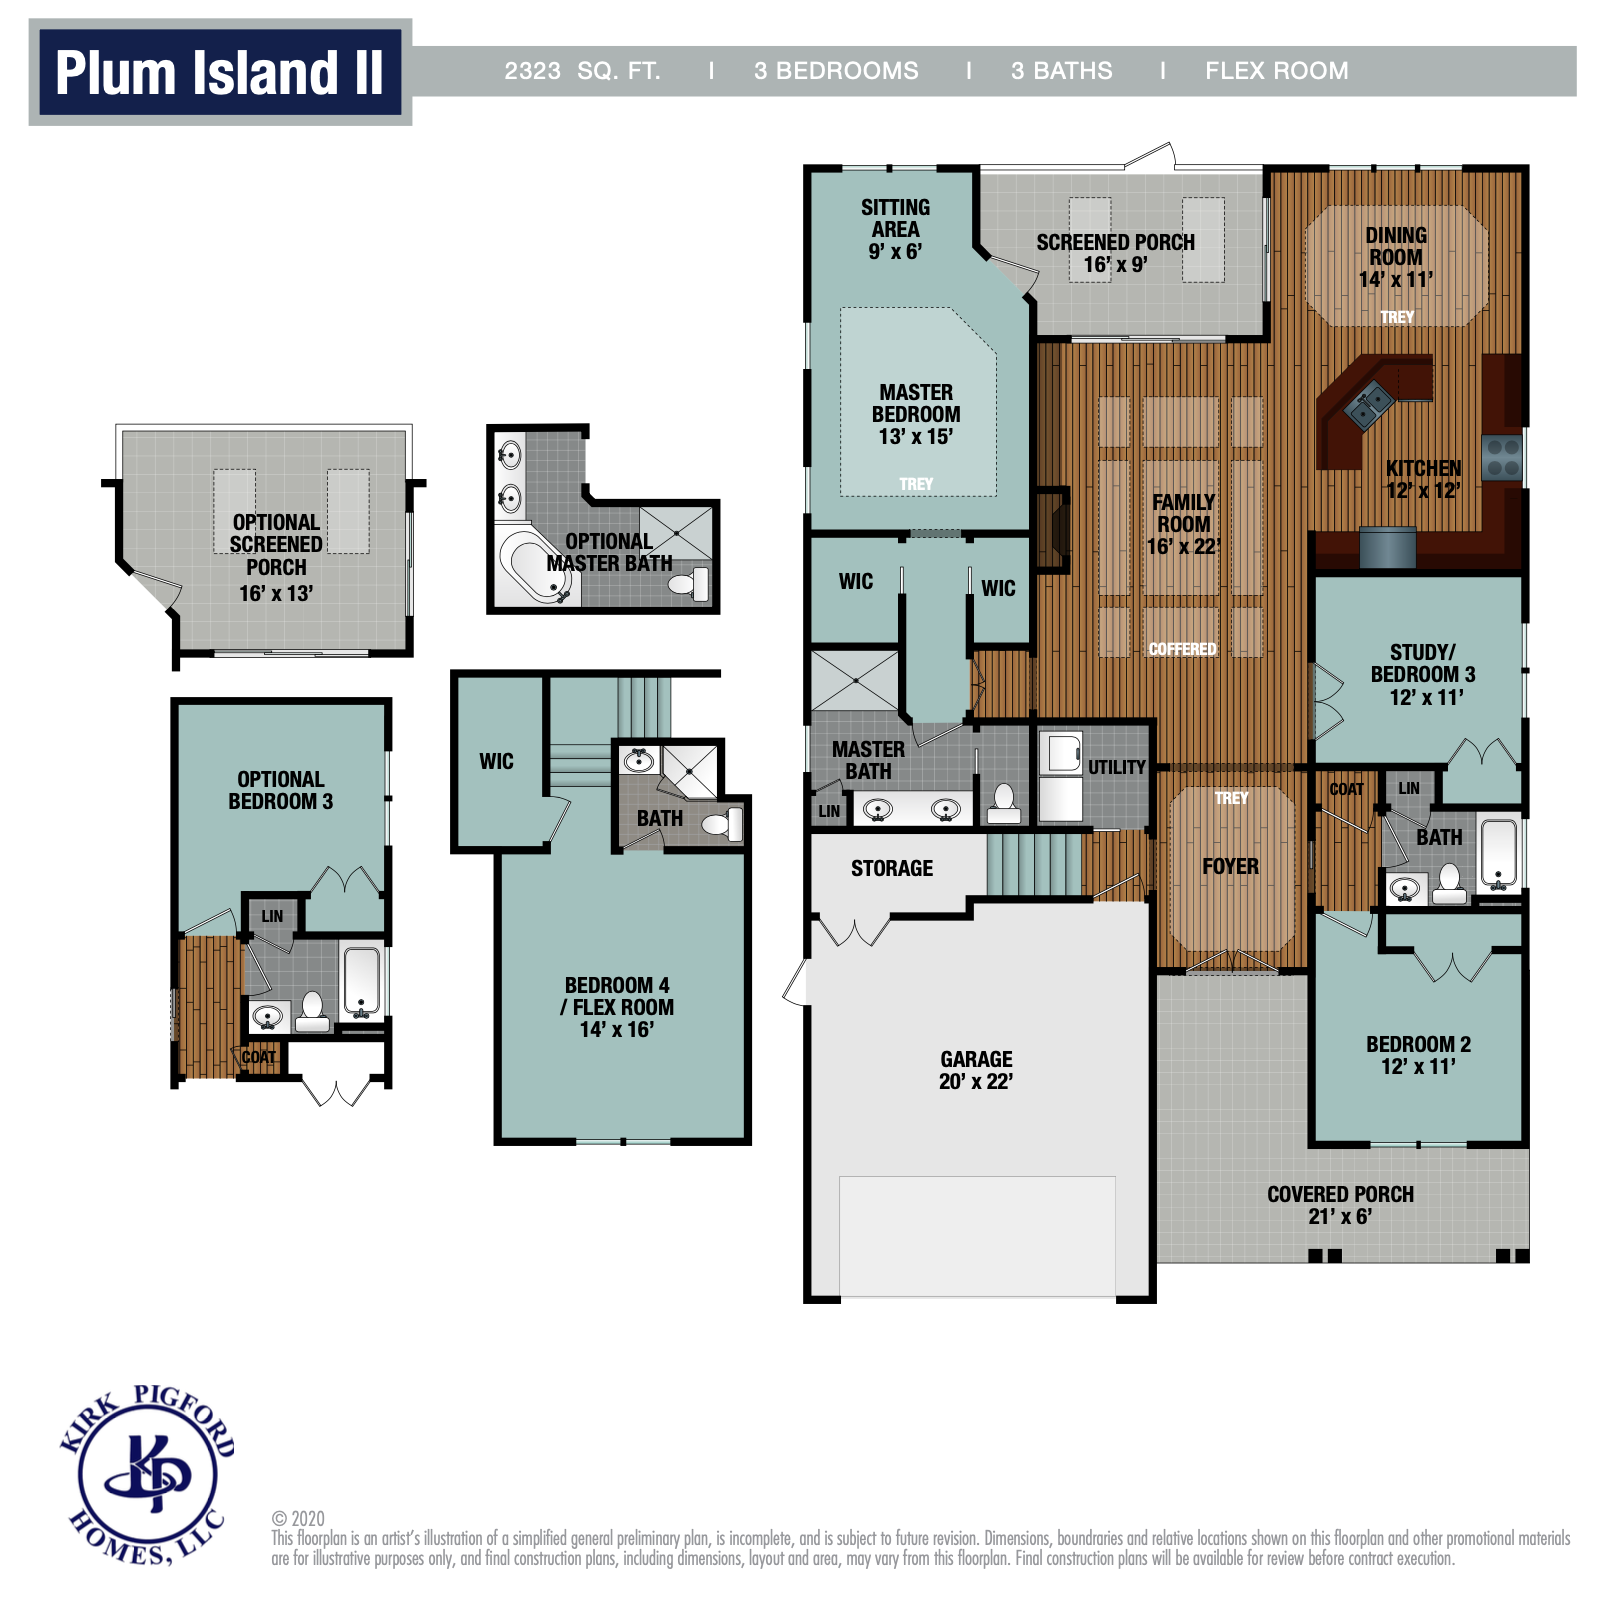 Plum Island II Hearthstone floor plan image